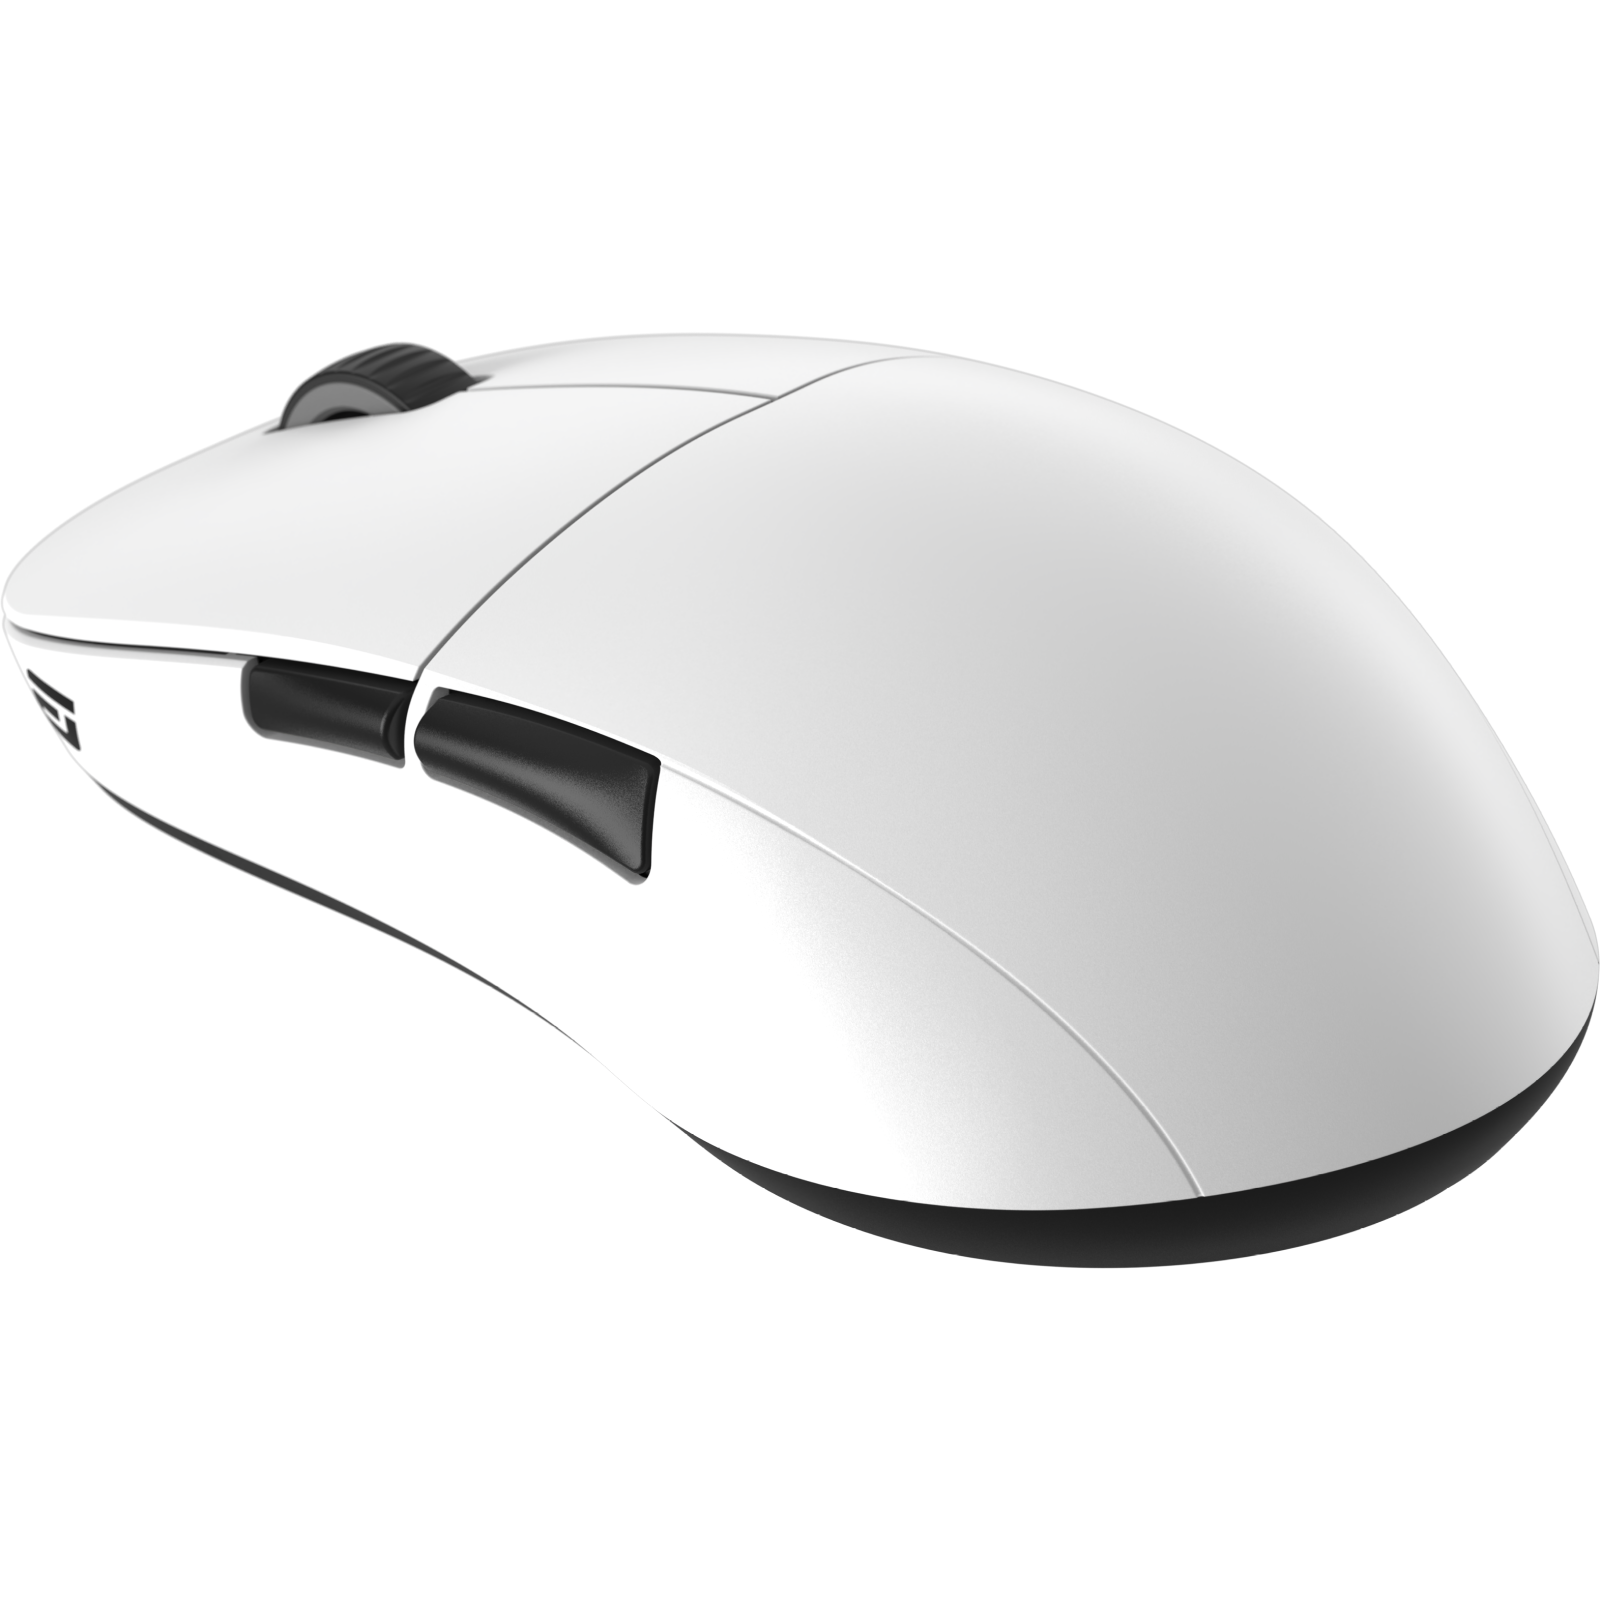 Endgame Gear XM2WE Wireless Gaming Mouse White